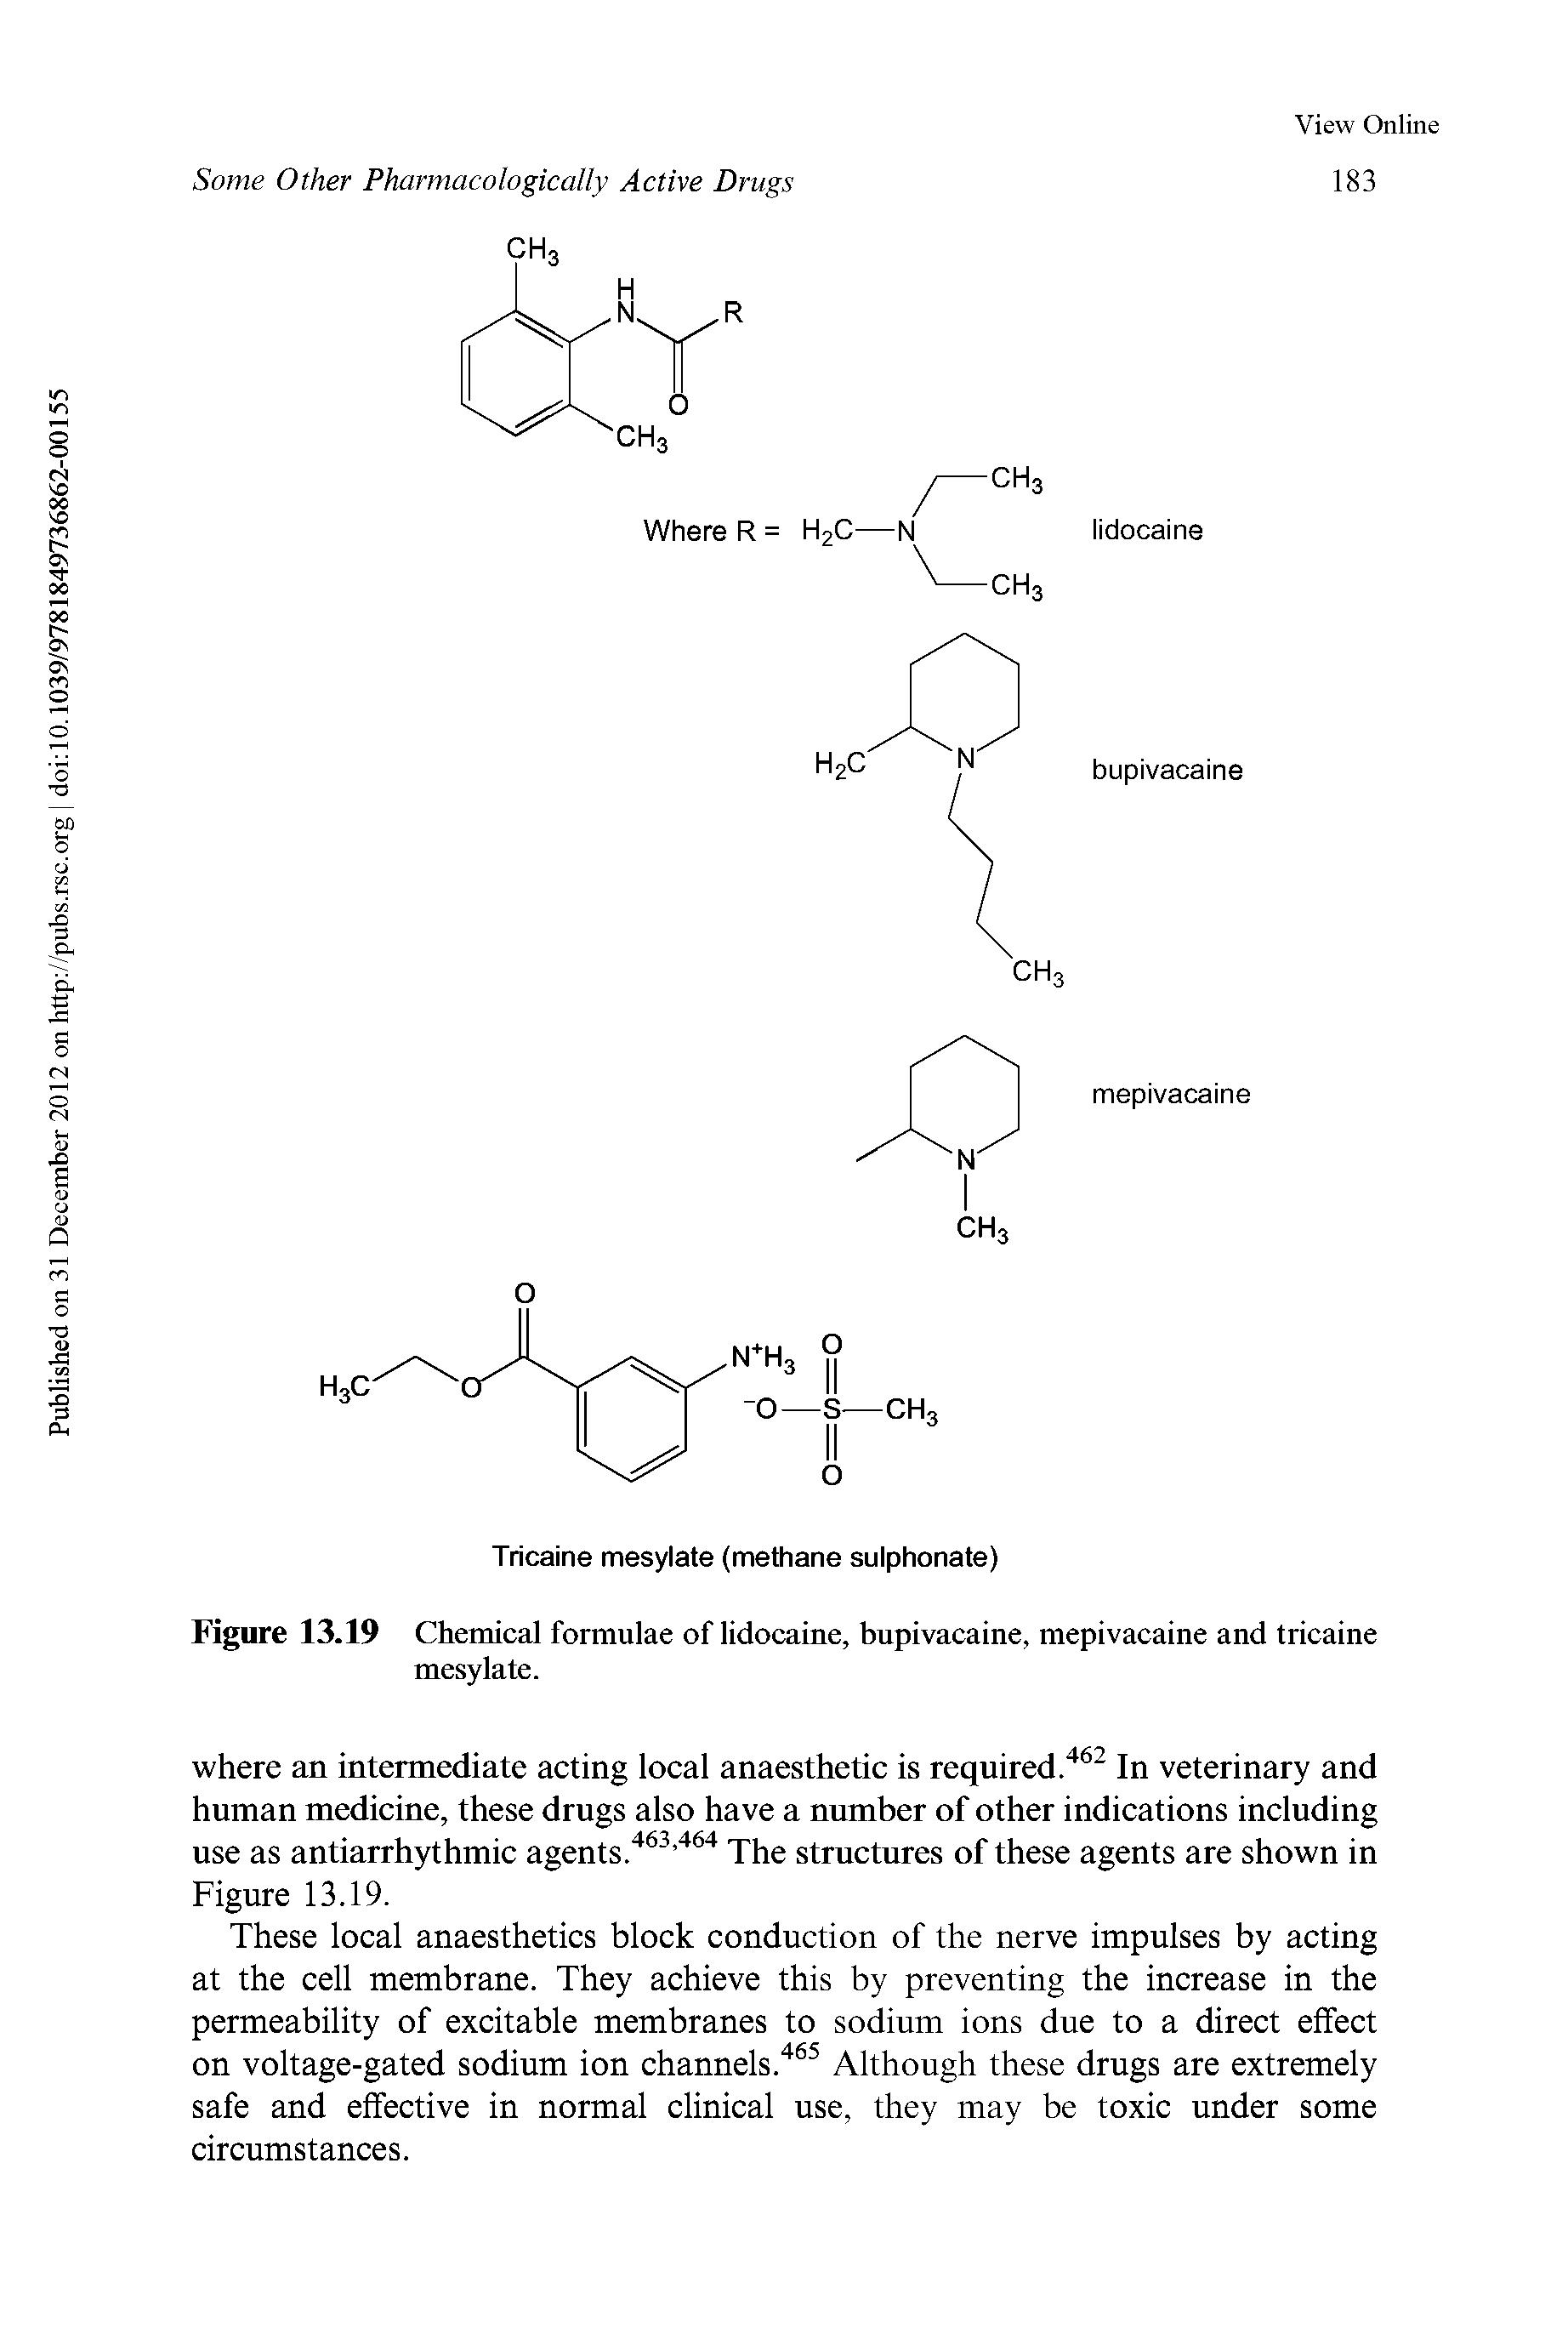 Figure 13.19 Chemical formulae of lidocaine, bupivacaine, mepivacaine and tricaine mesylate.